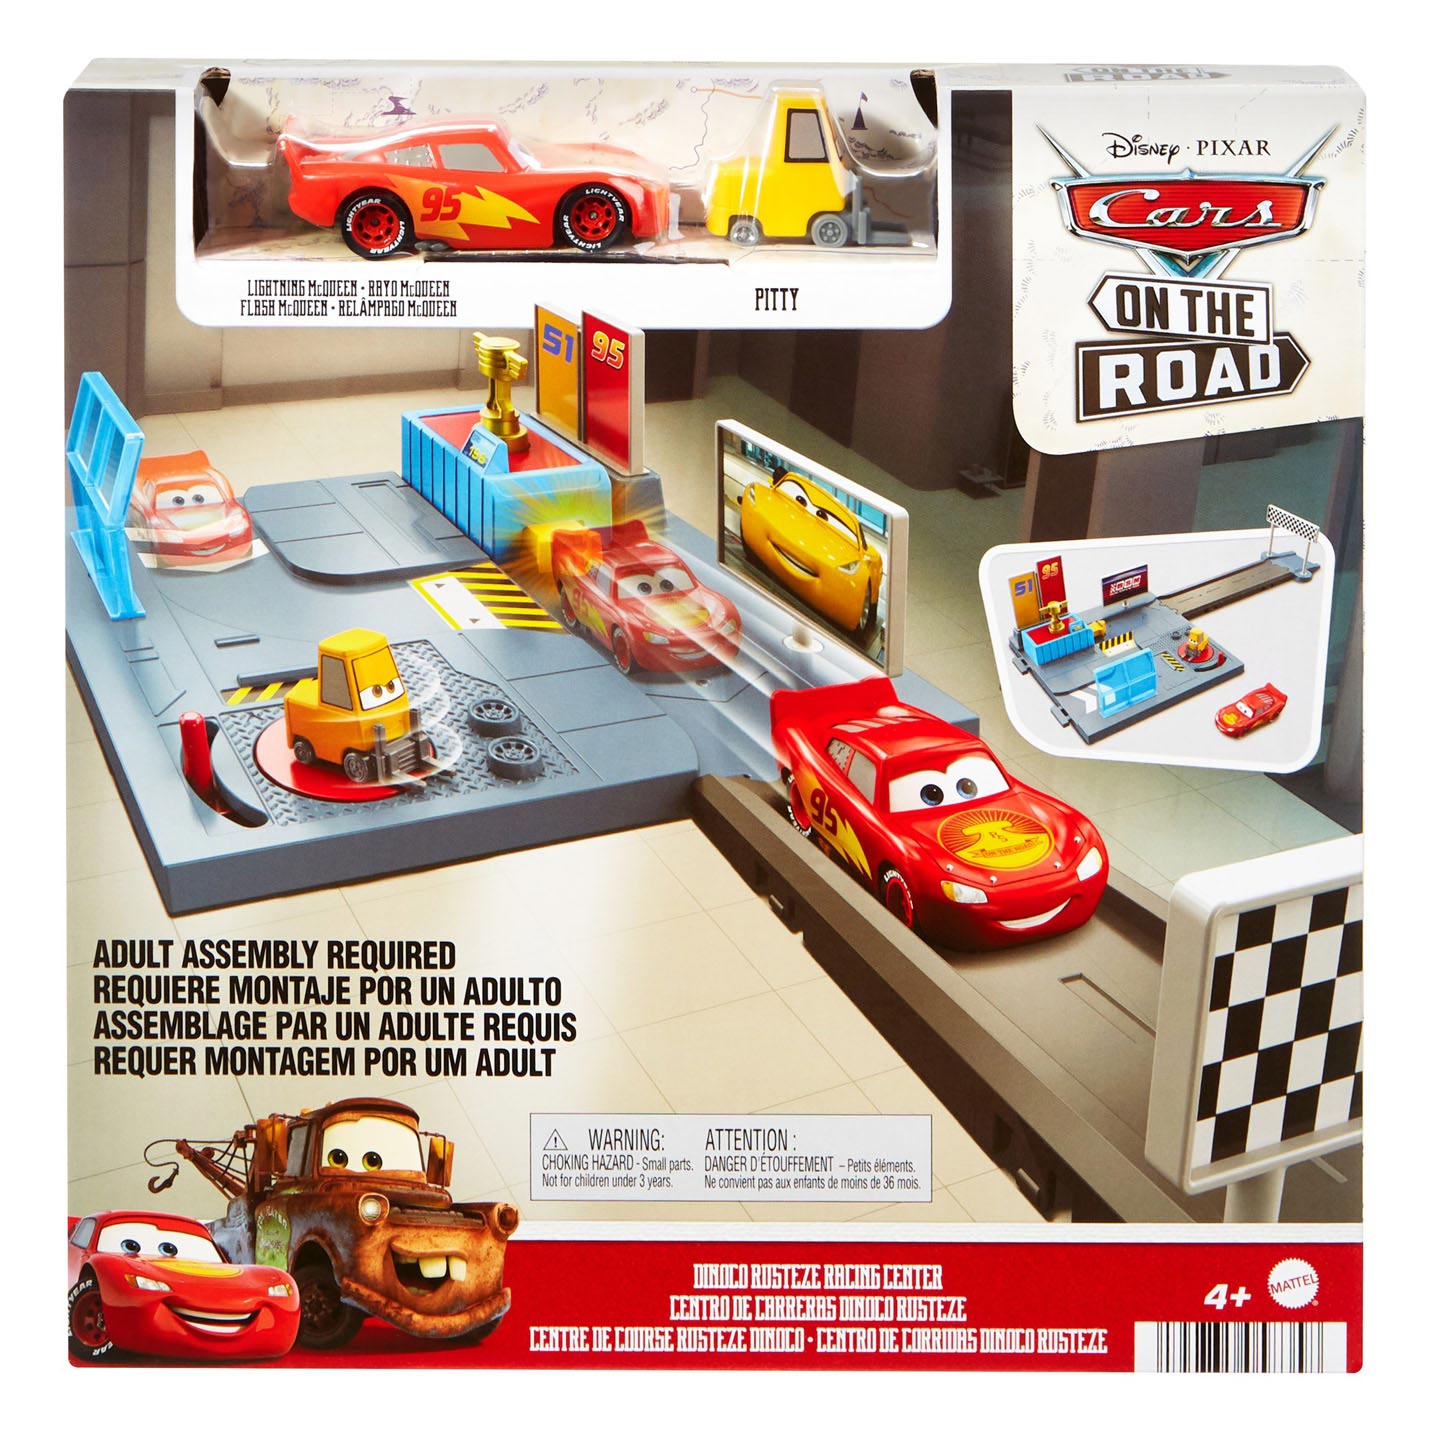 Keizer Speciaal Tegenstander Disney Pixar Cars Rusteze Training Center Playset | Thimble Toys